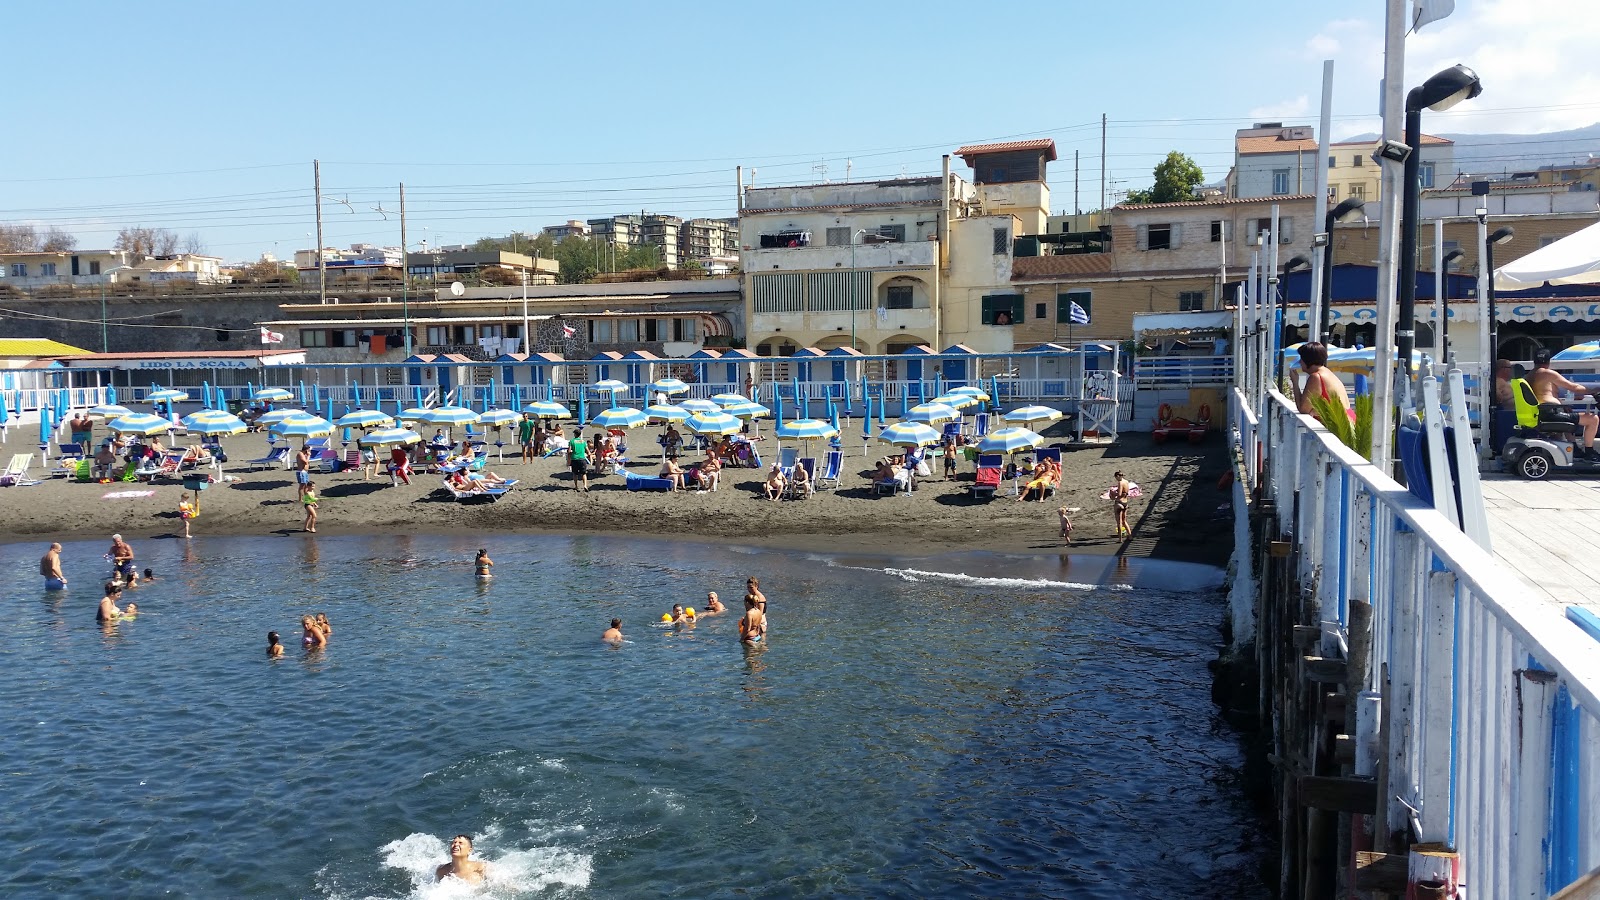 Fotografie cu Spiaggia di via Calastro cu nivelul de curățenie in medie